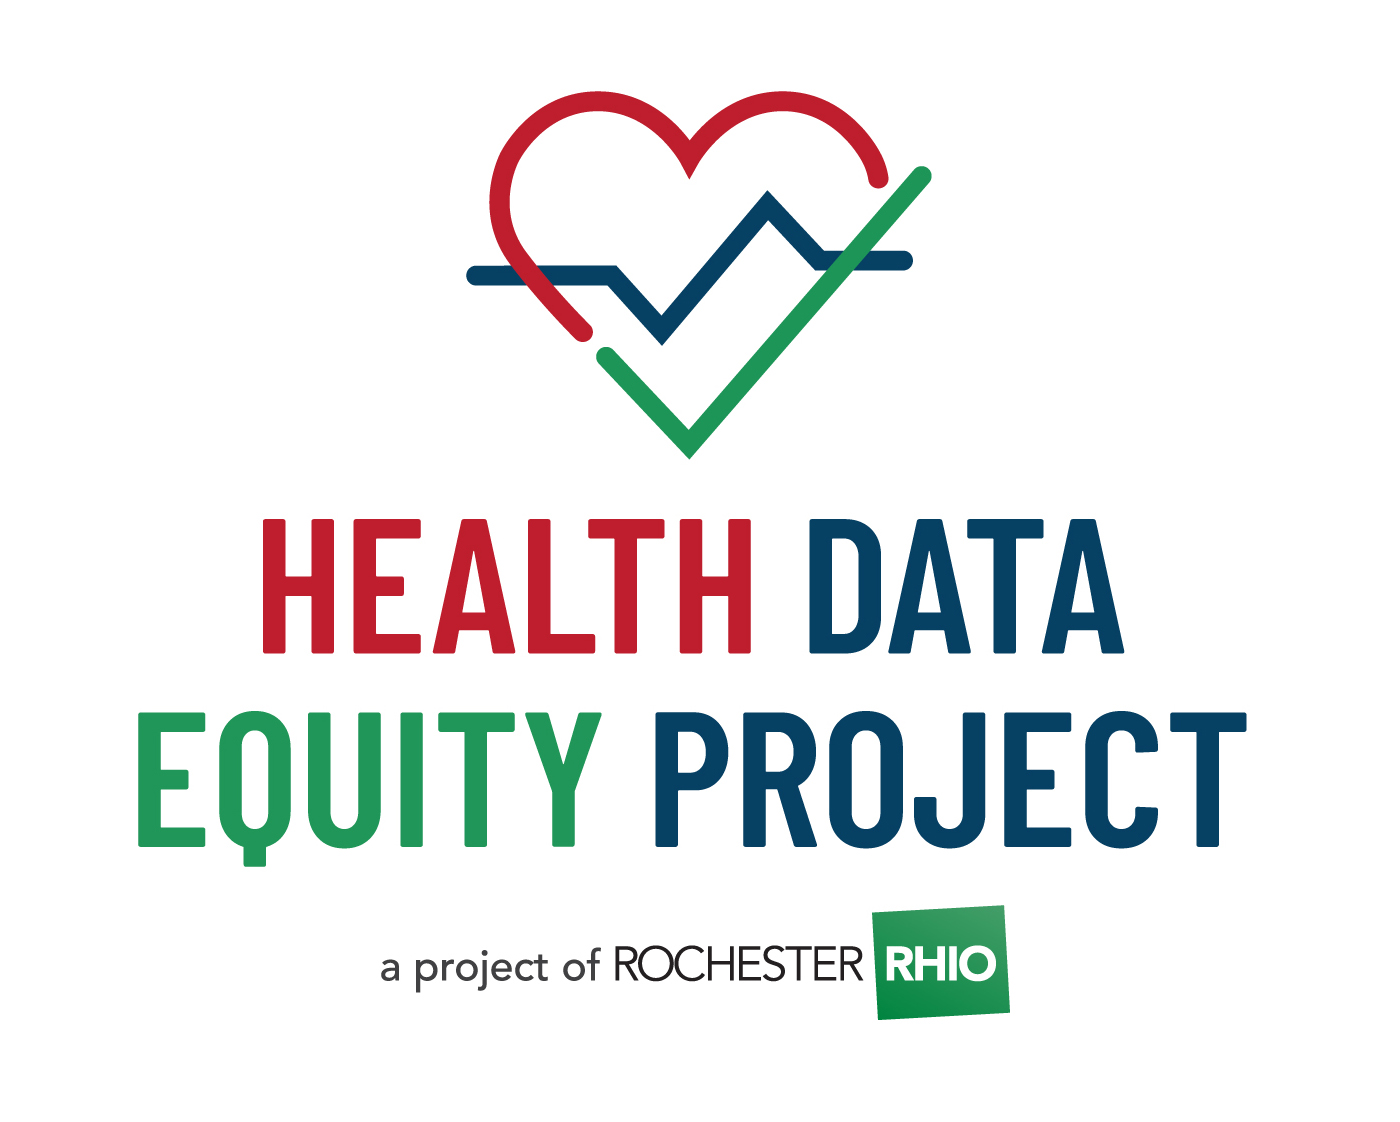 Health Data Equaity Project logo